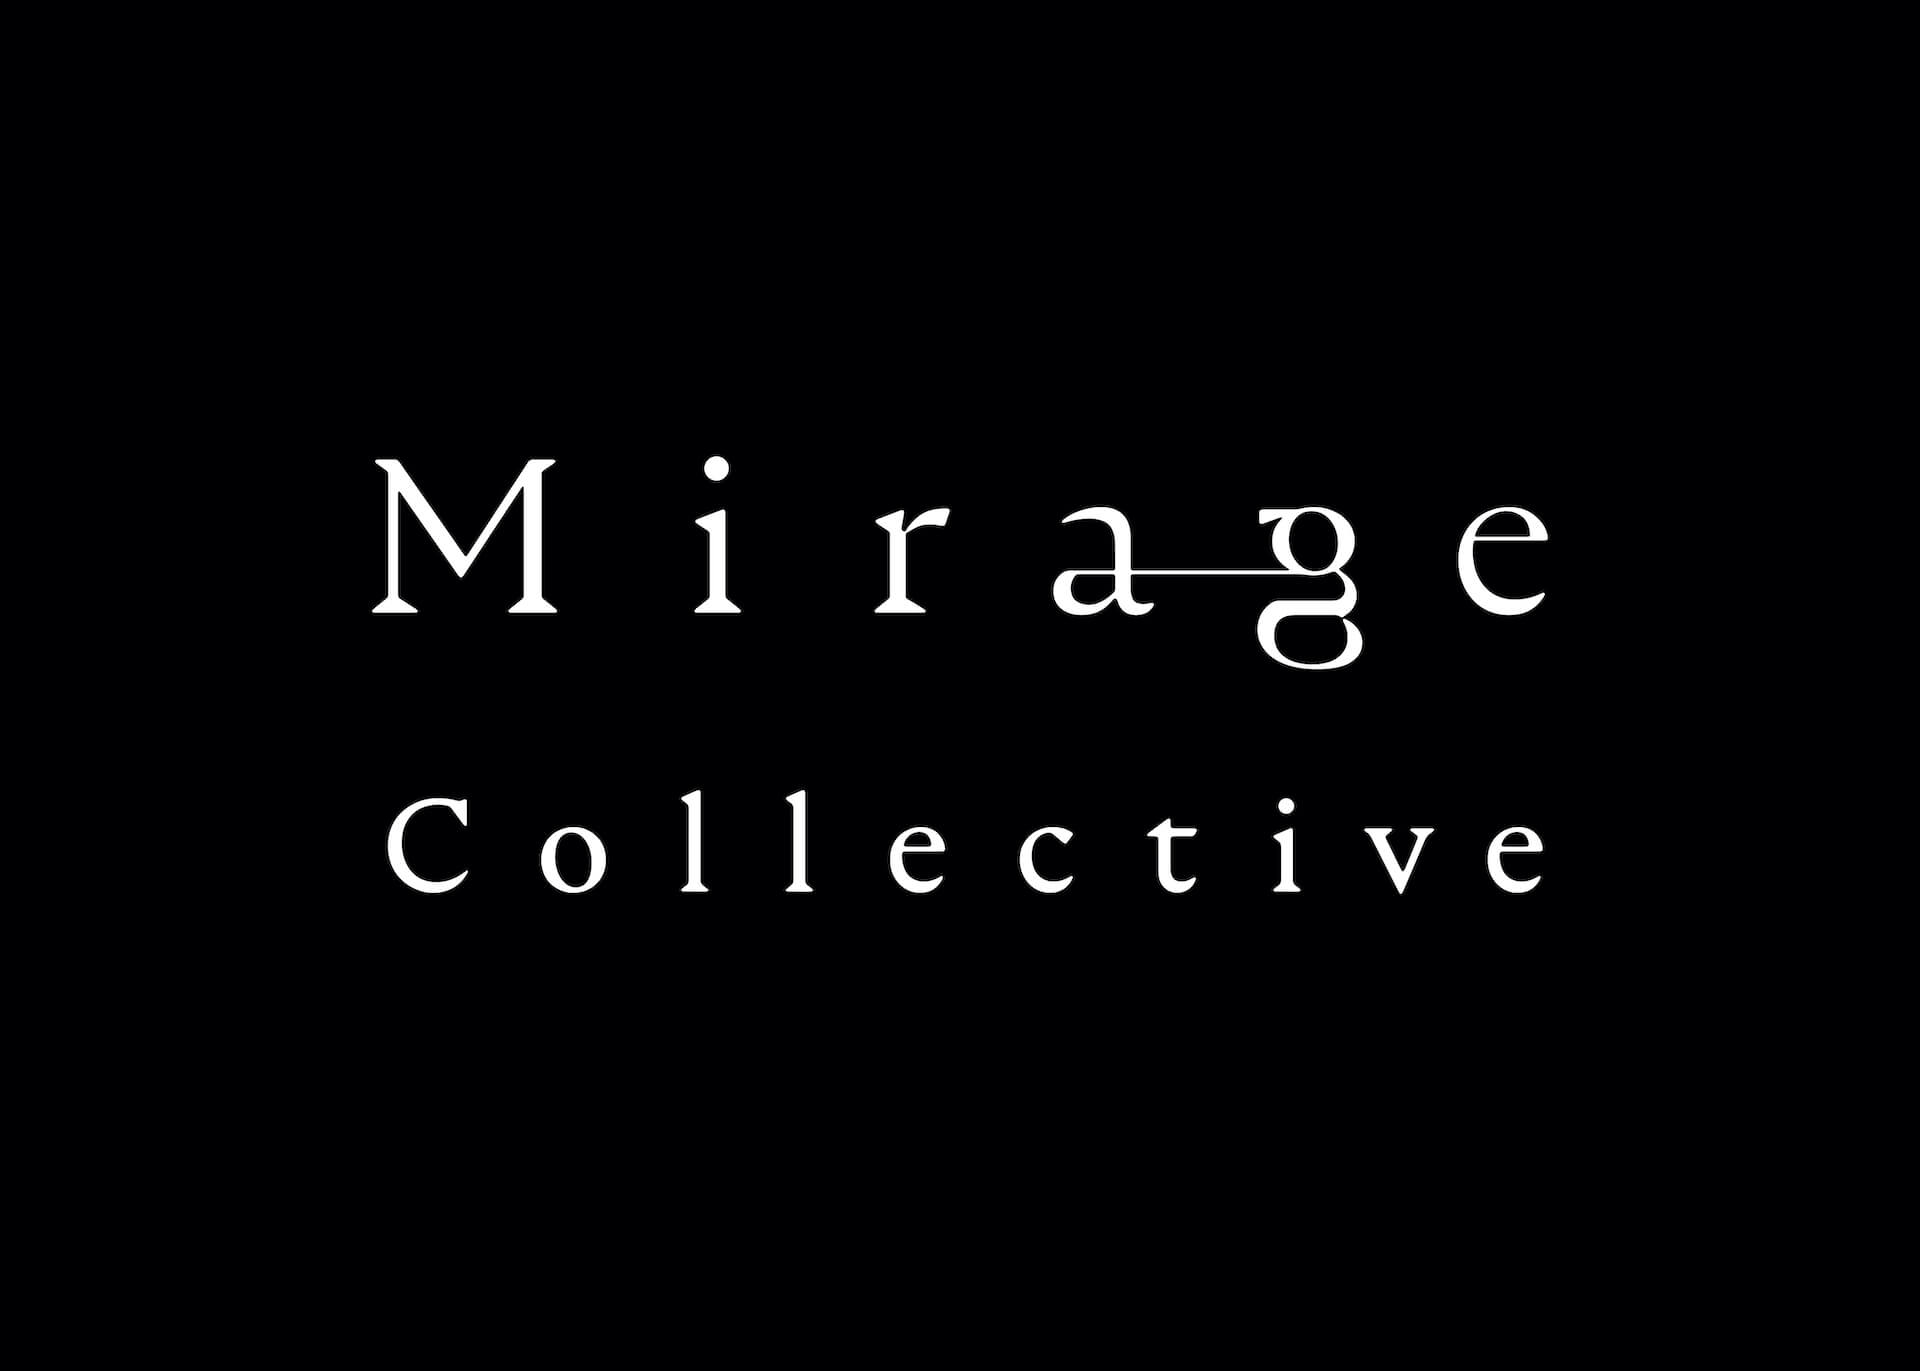 STUTSプロデュースの音楽集団・Mirage Collectiveが「Mirage Op.3 - Collective ver.」レコーディングのビハインドザシーンを公開｜来月にはアルバムのリリースも予定 music221125-mirage-collective2